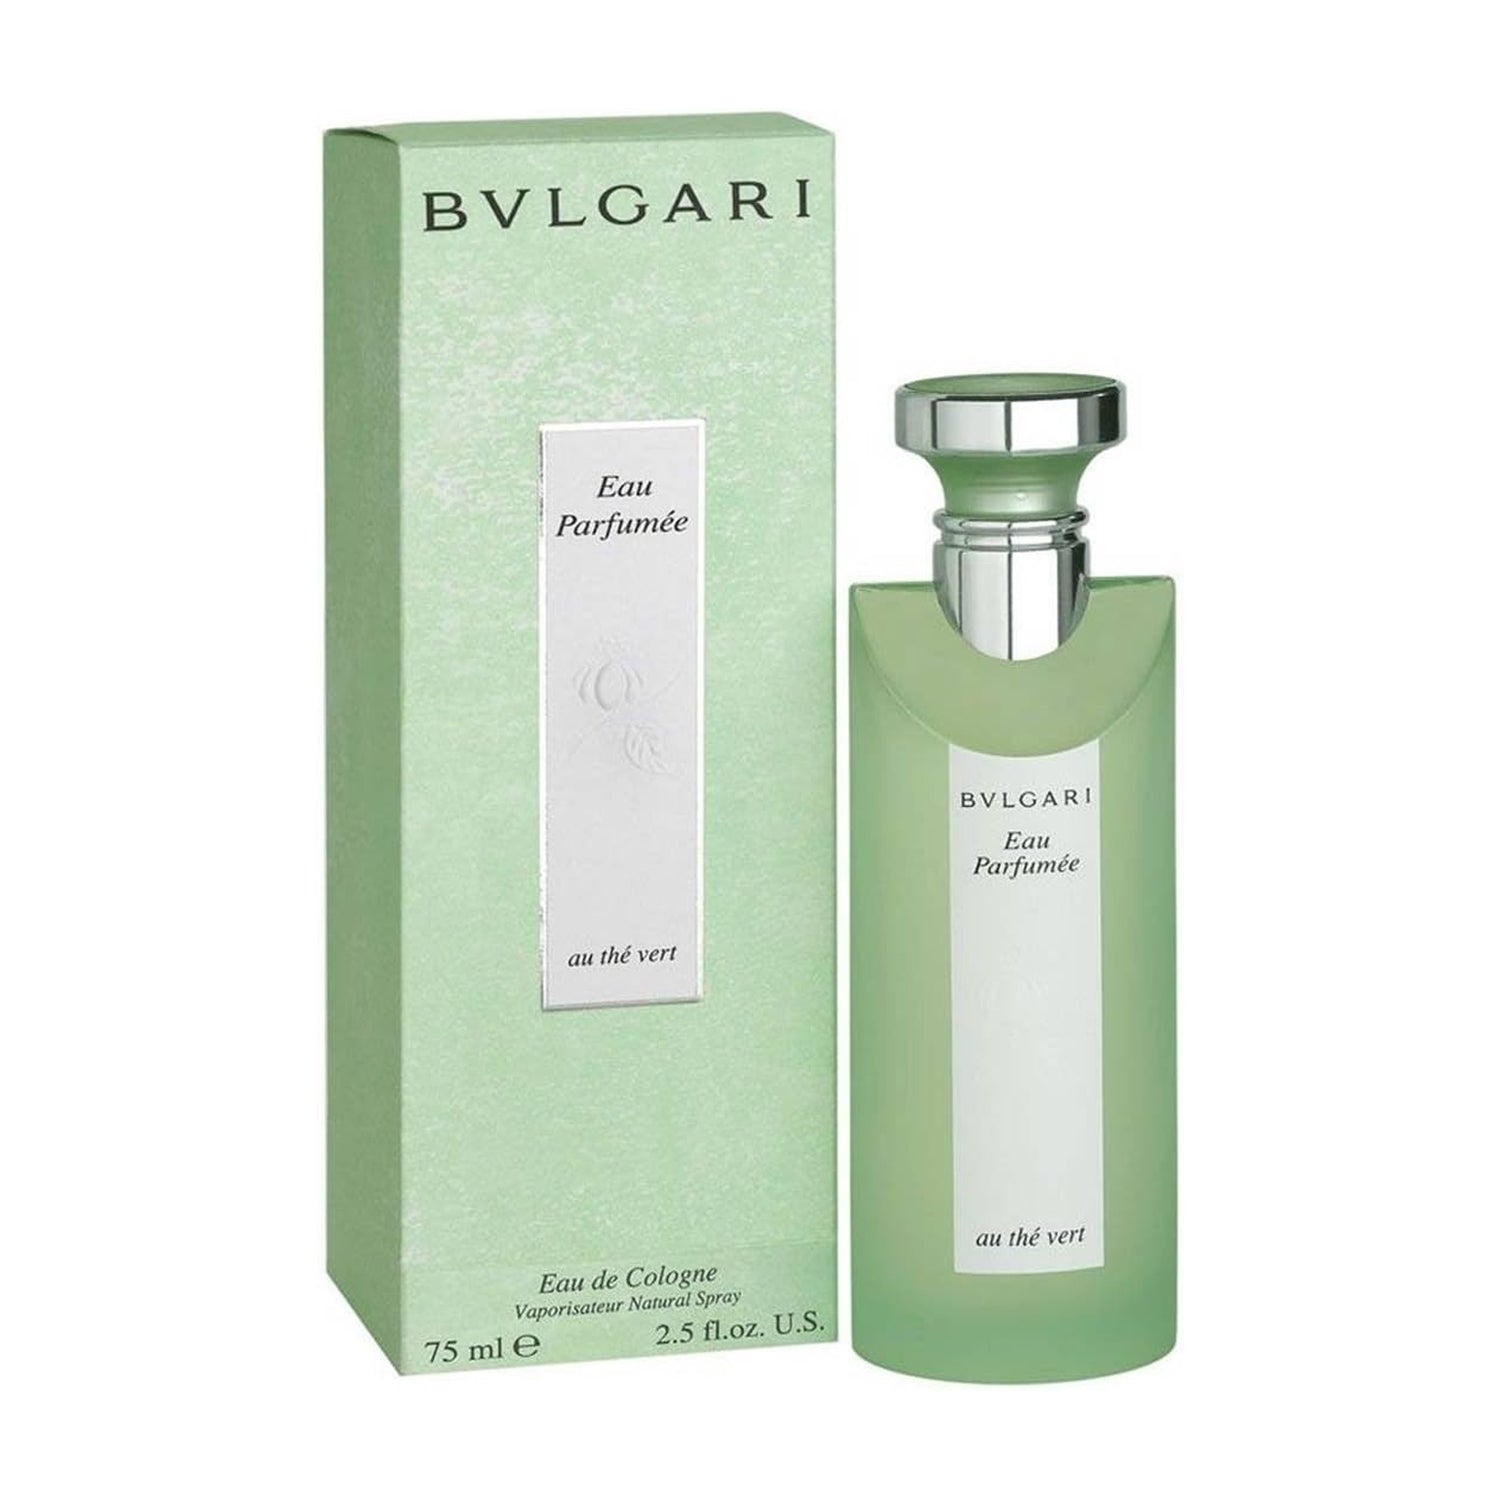 Bvlgari Eau Parfumee Au The Vert 75 ml Eau De Cologne Spray For Women